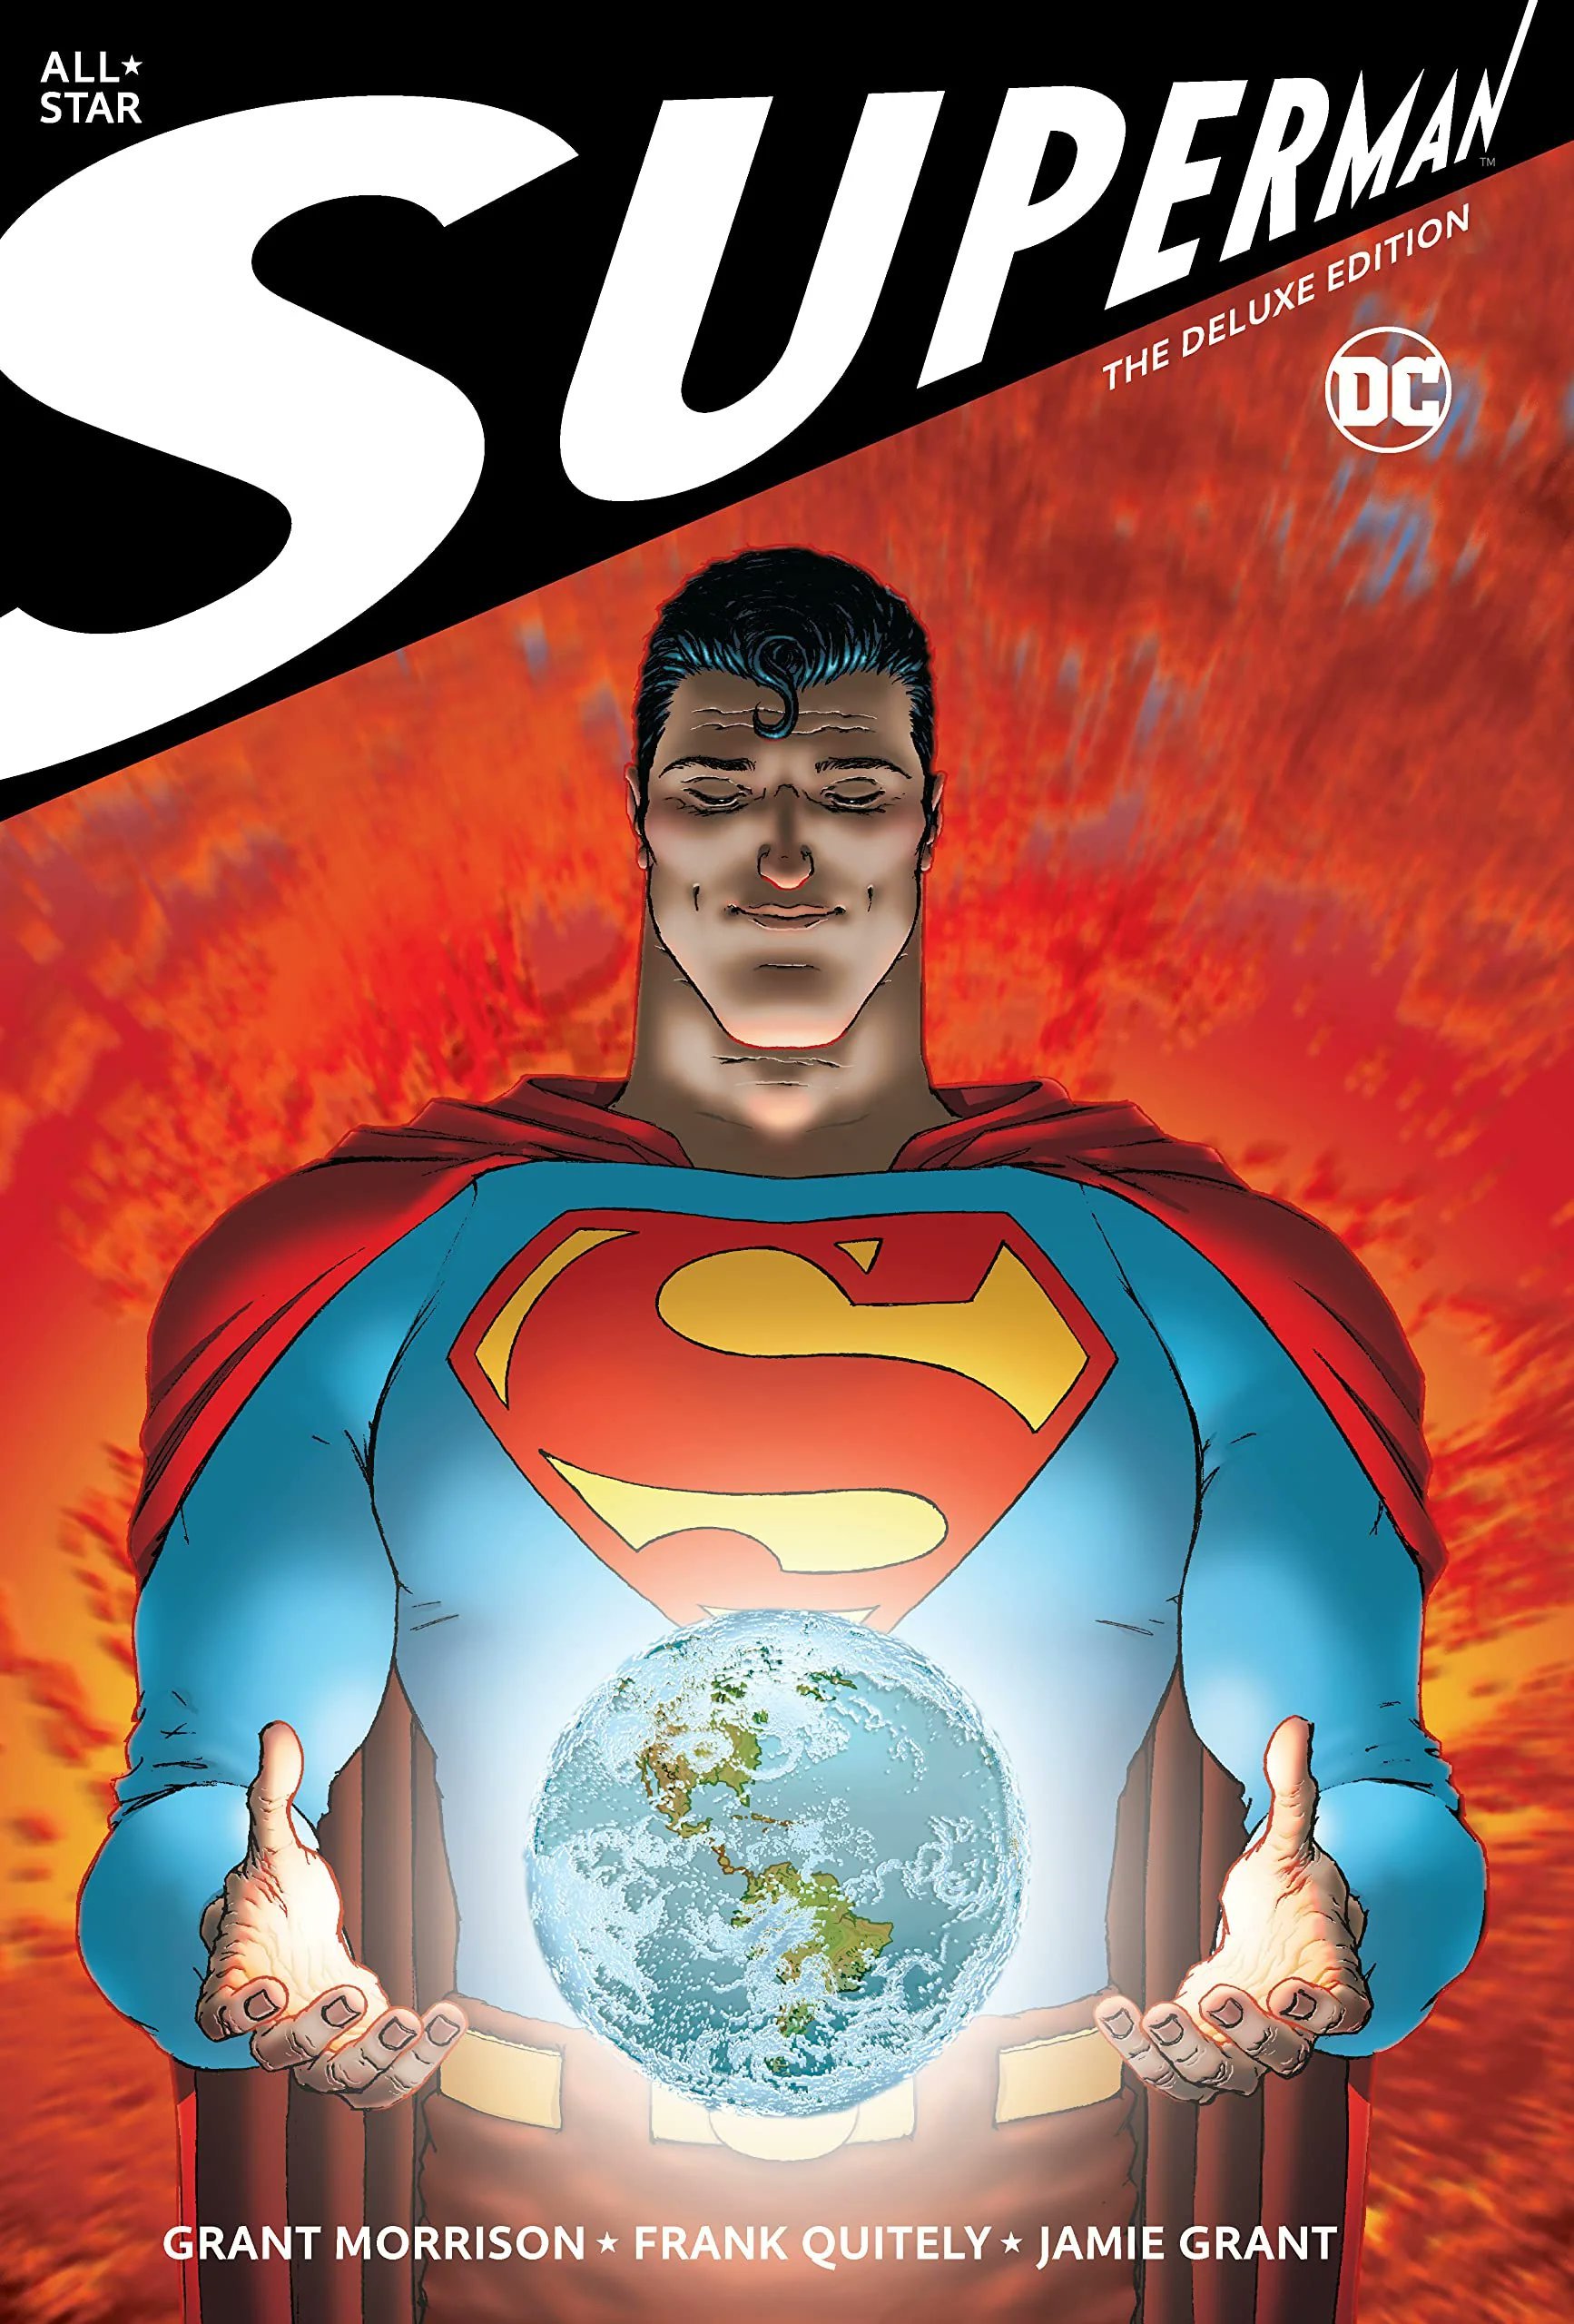 HENRY CAVILL DEMITIDO! Novo Superman anunciado! 